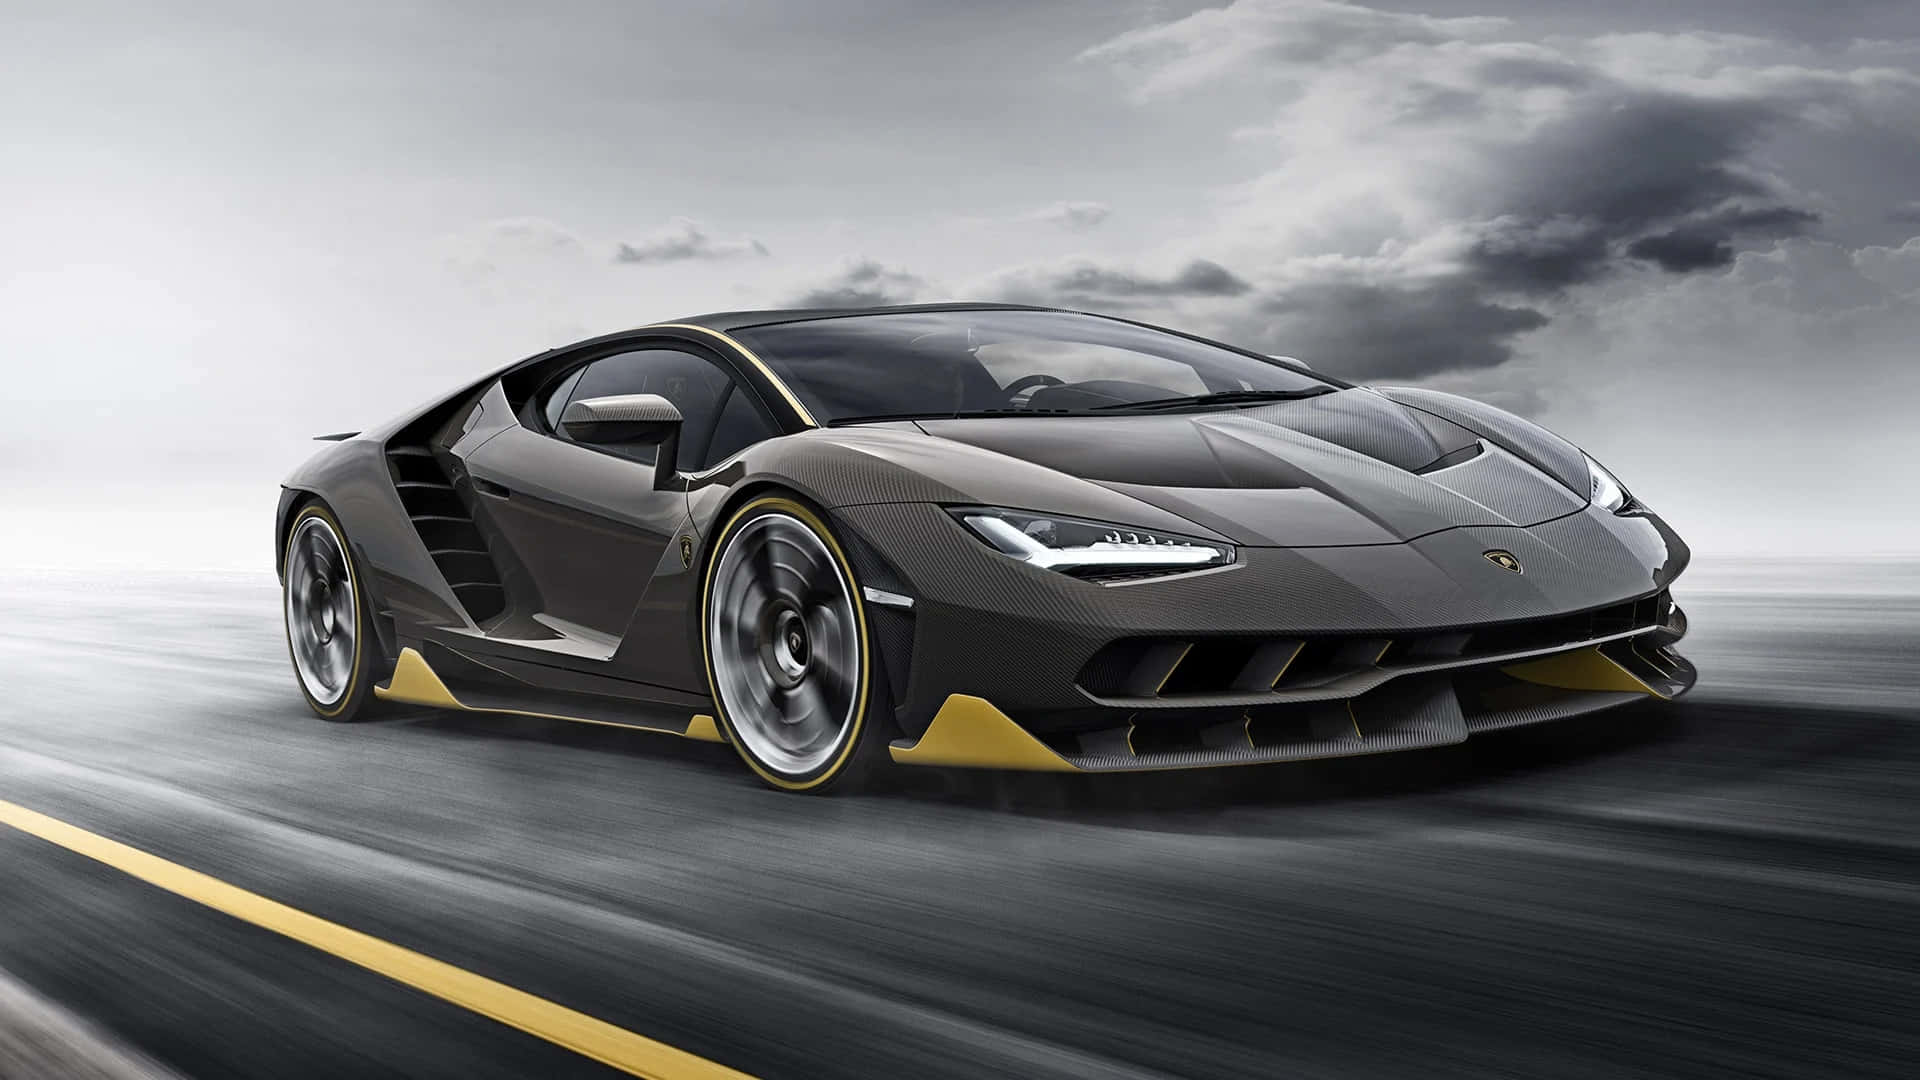 Cool Lamborghinis ensuring a stylish ride.